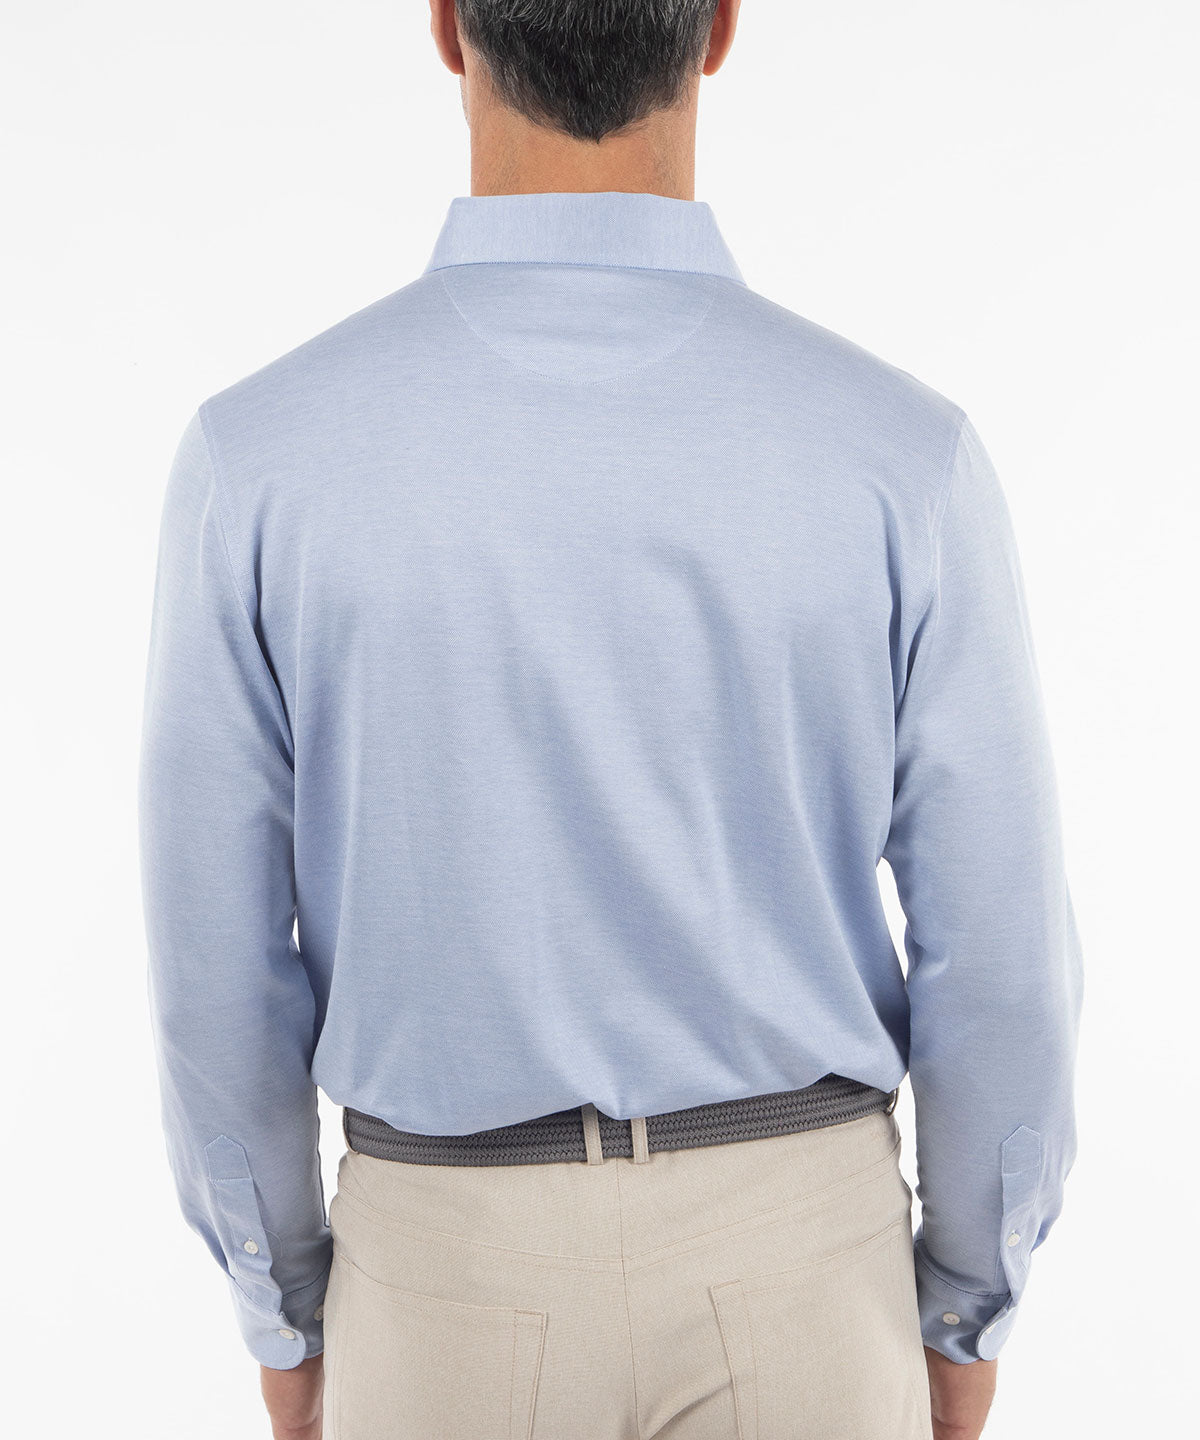 Signature 100% Cotton Oxford Solid Button-Down Shirt - Bobby Jones